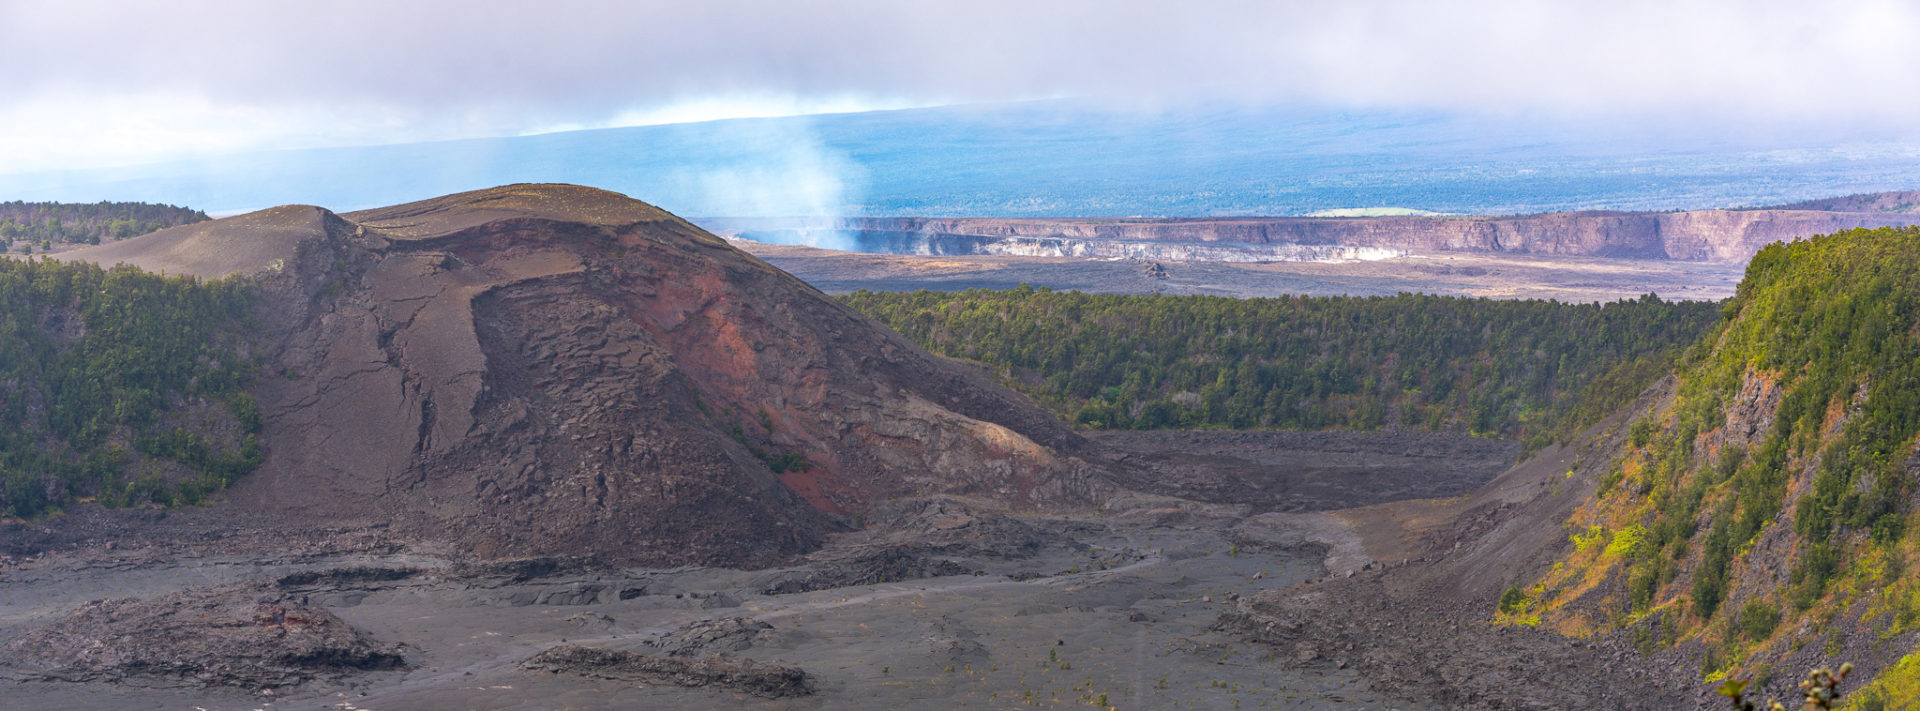 TREX 2018 Day 3: Geology of Kilauea Iki Crater